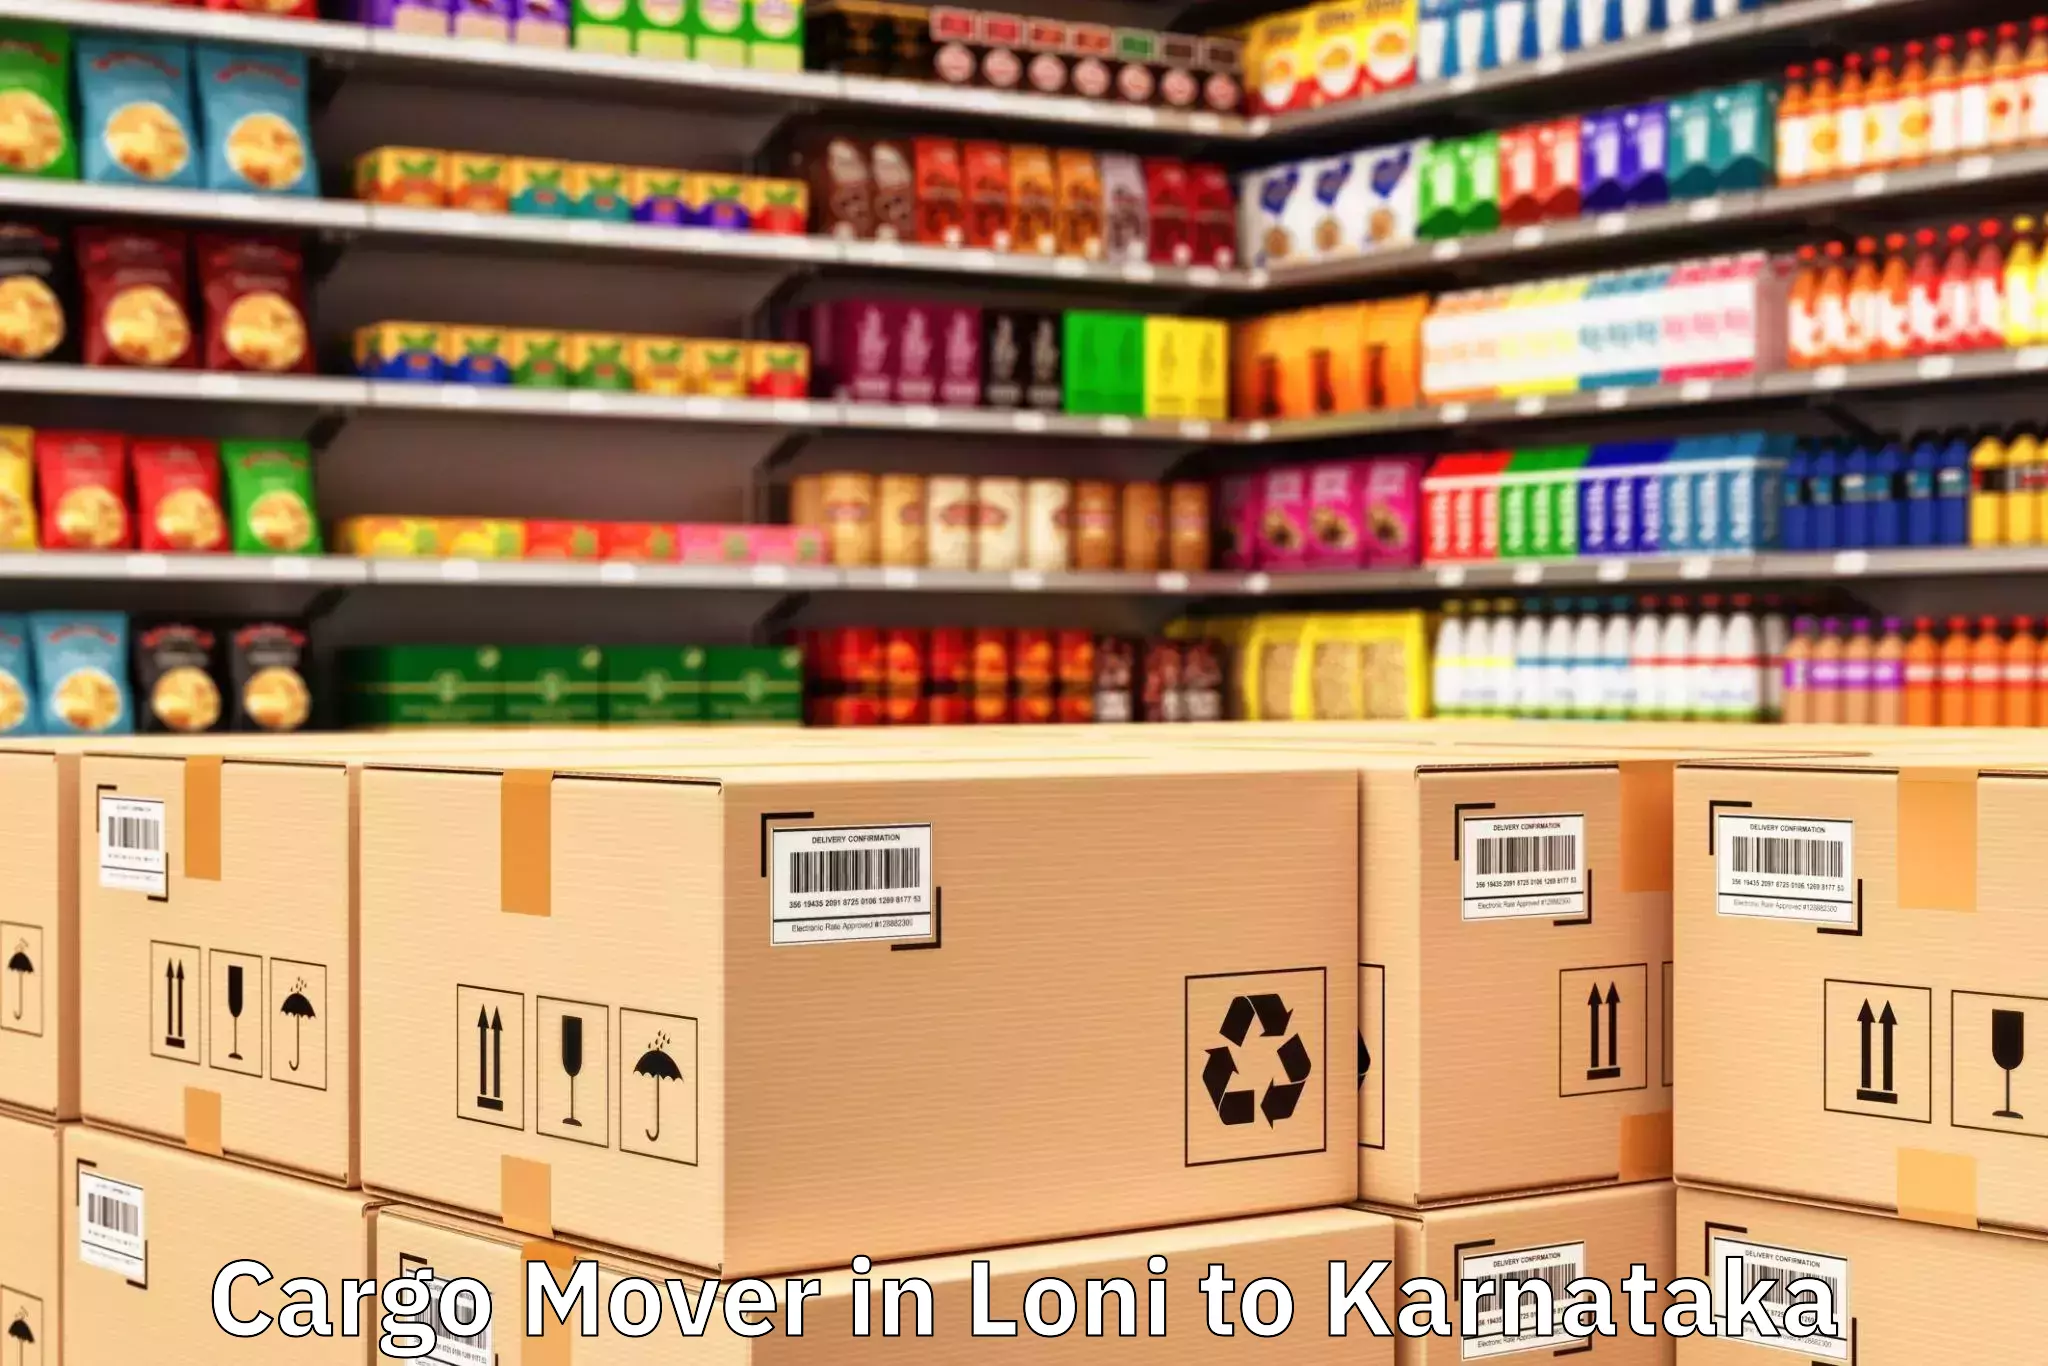 Discover Loni to Karnataka Cargo Mover